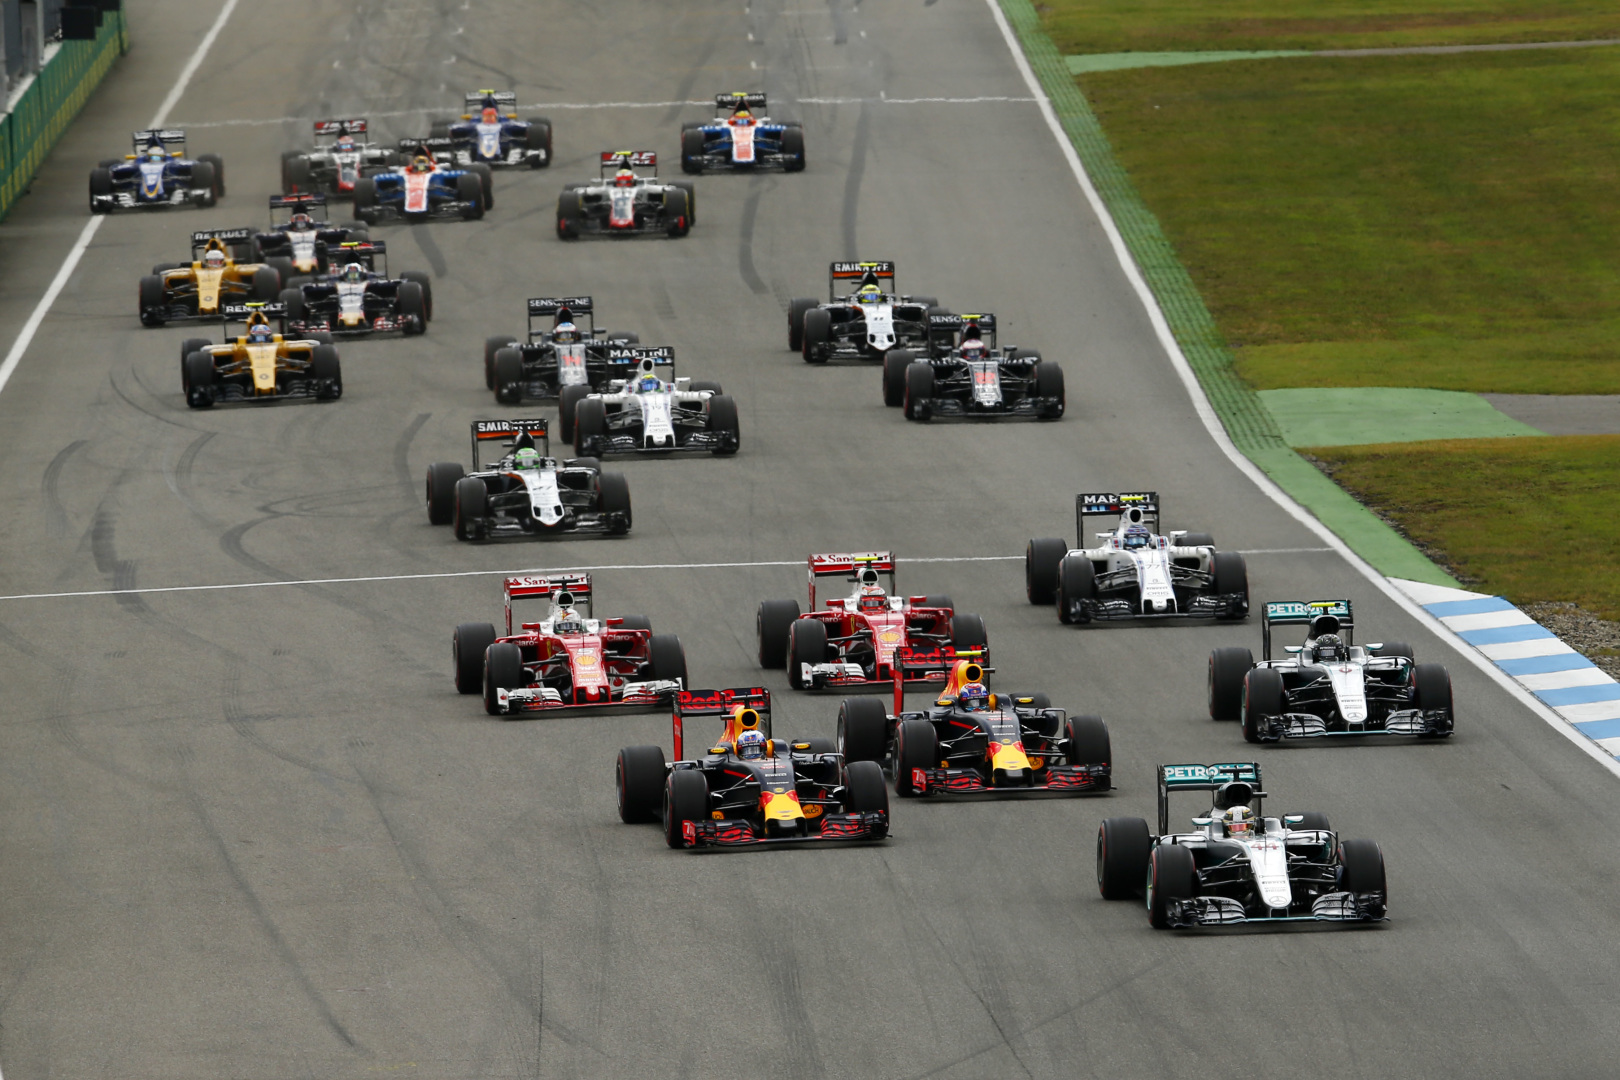 2016 German Grand Prix, Sunday